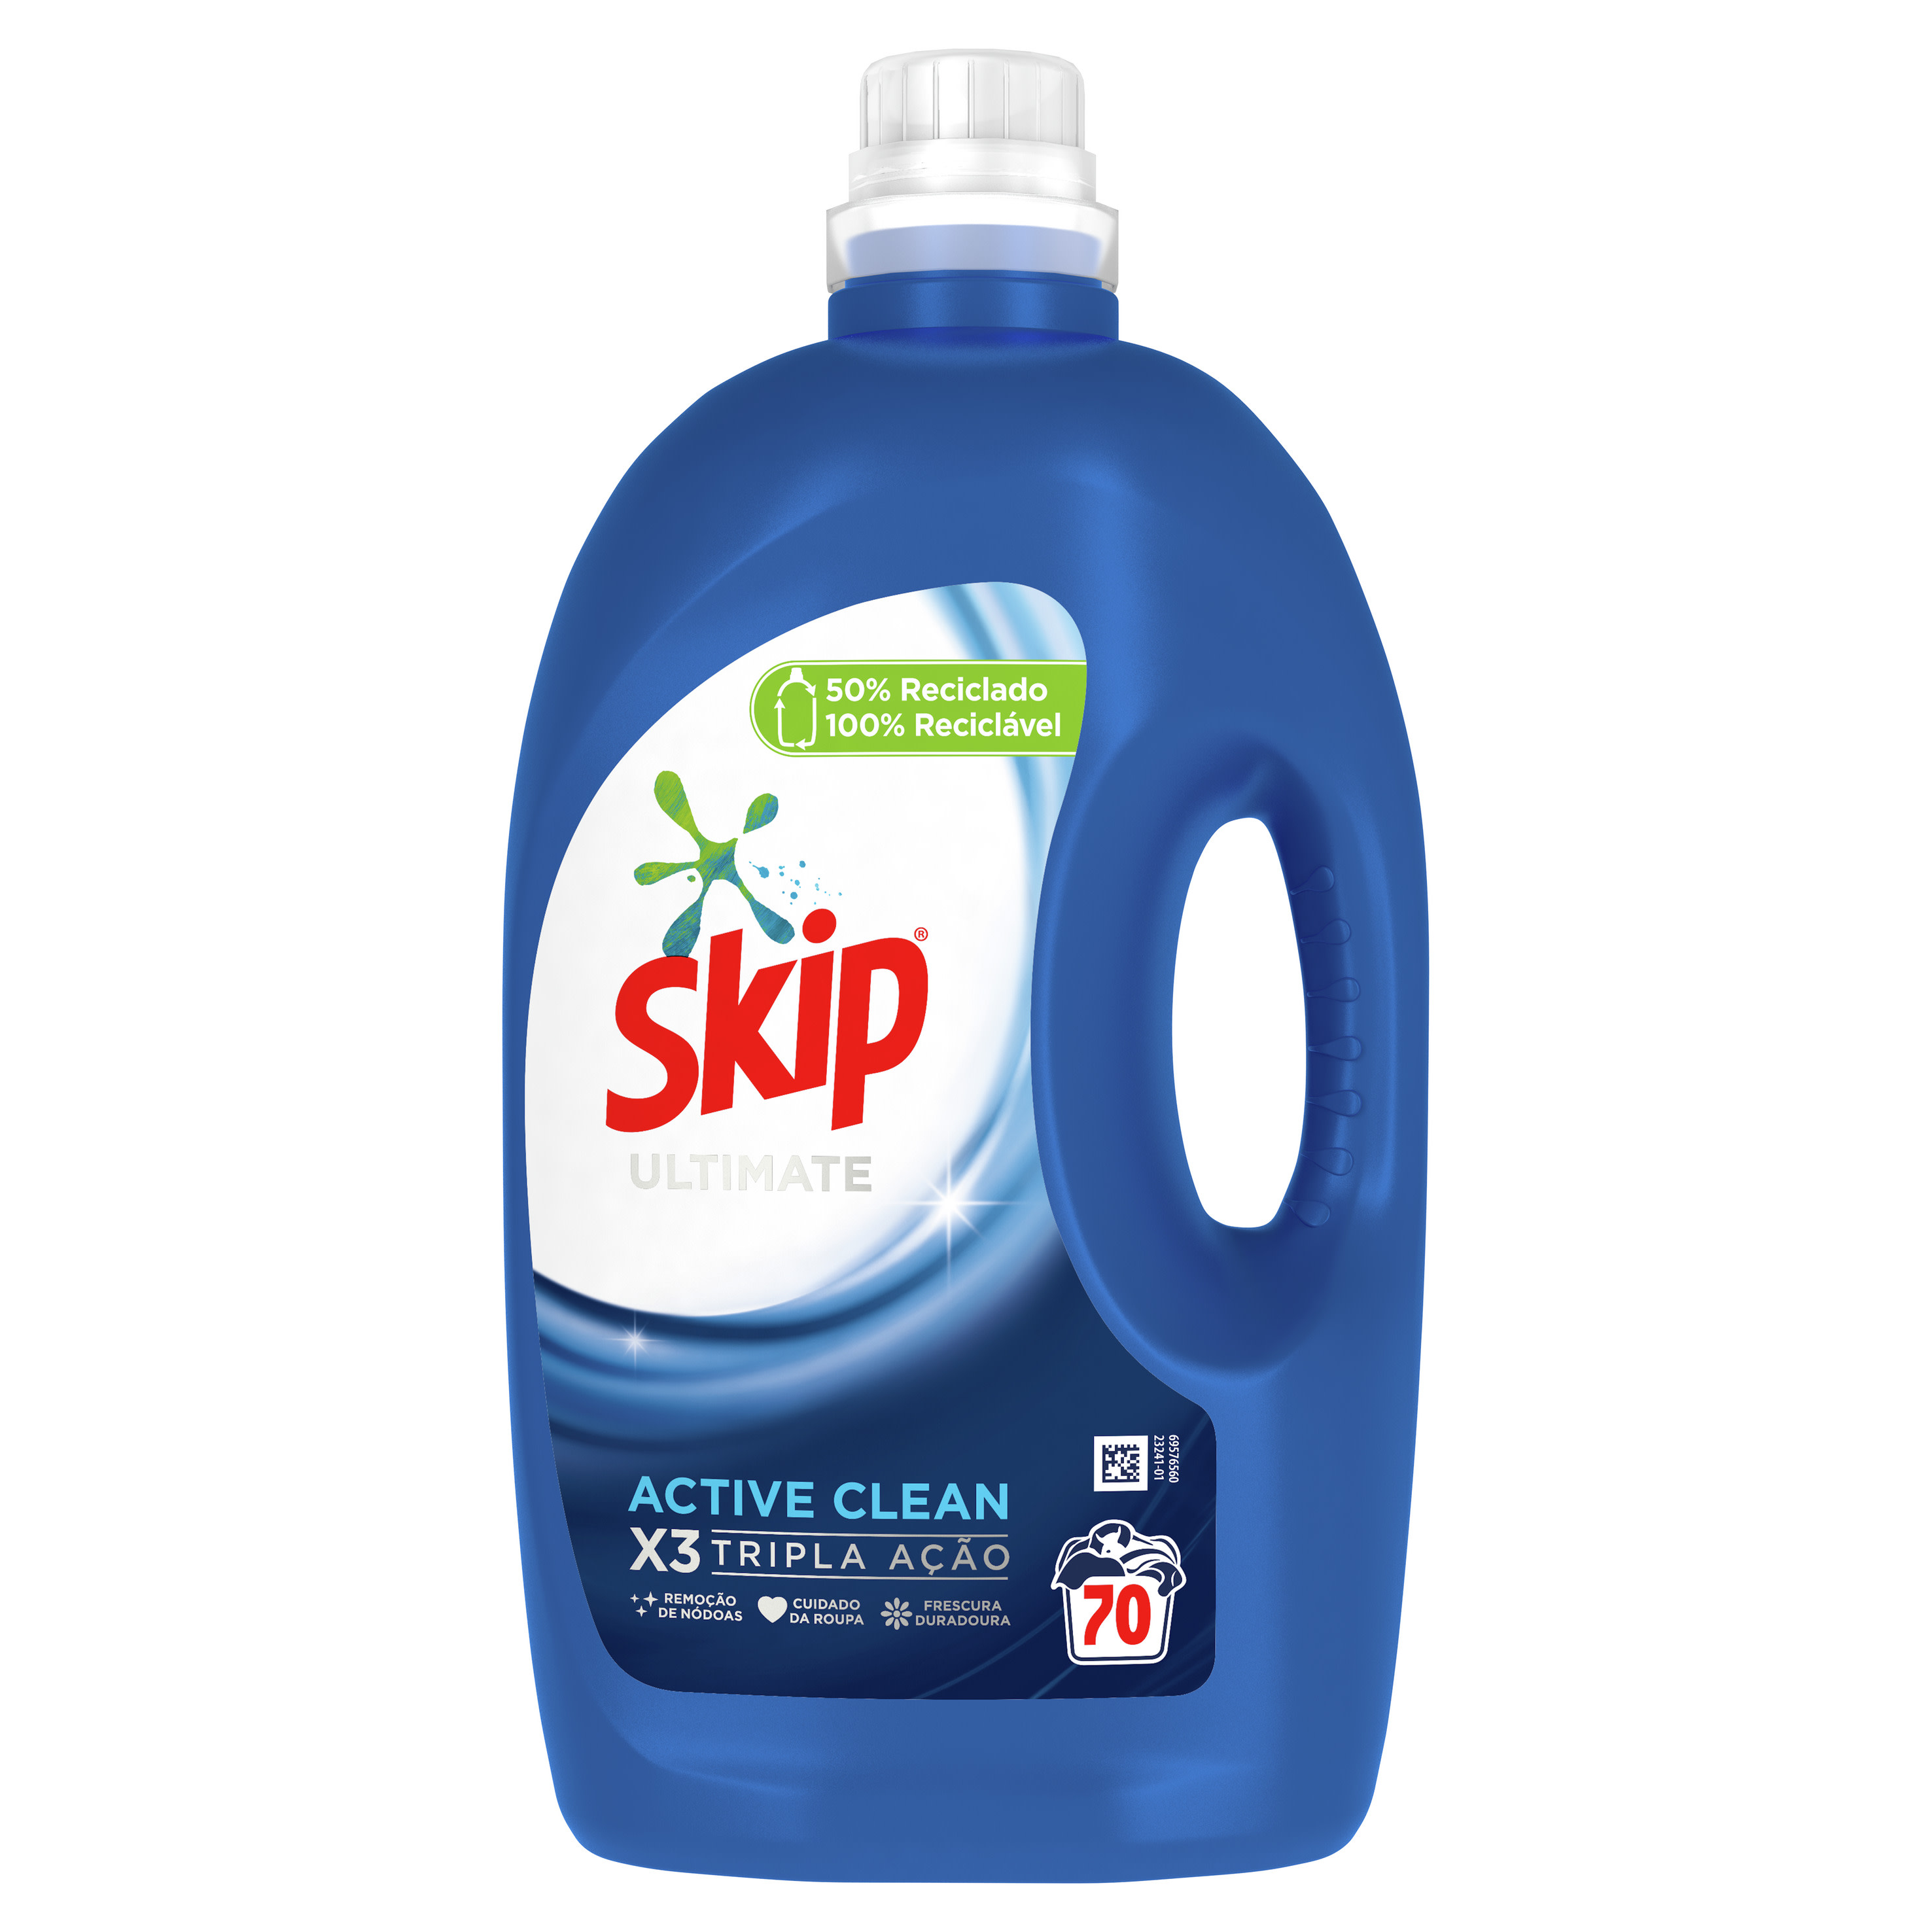 SKIP Detergente Líquido Ultimate Active Clean packshot